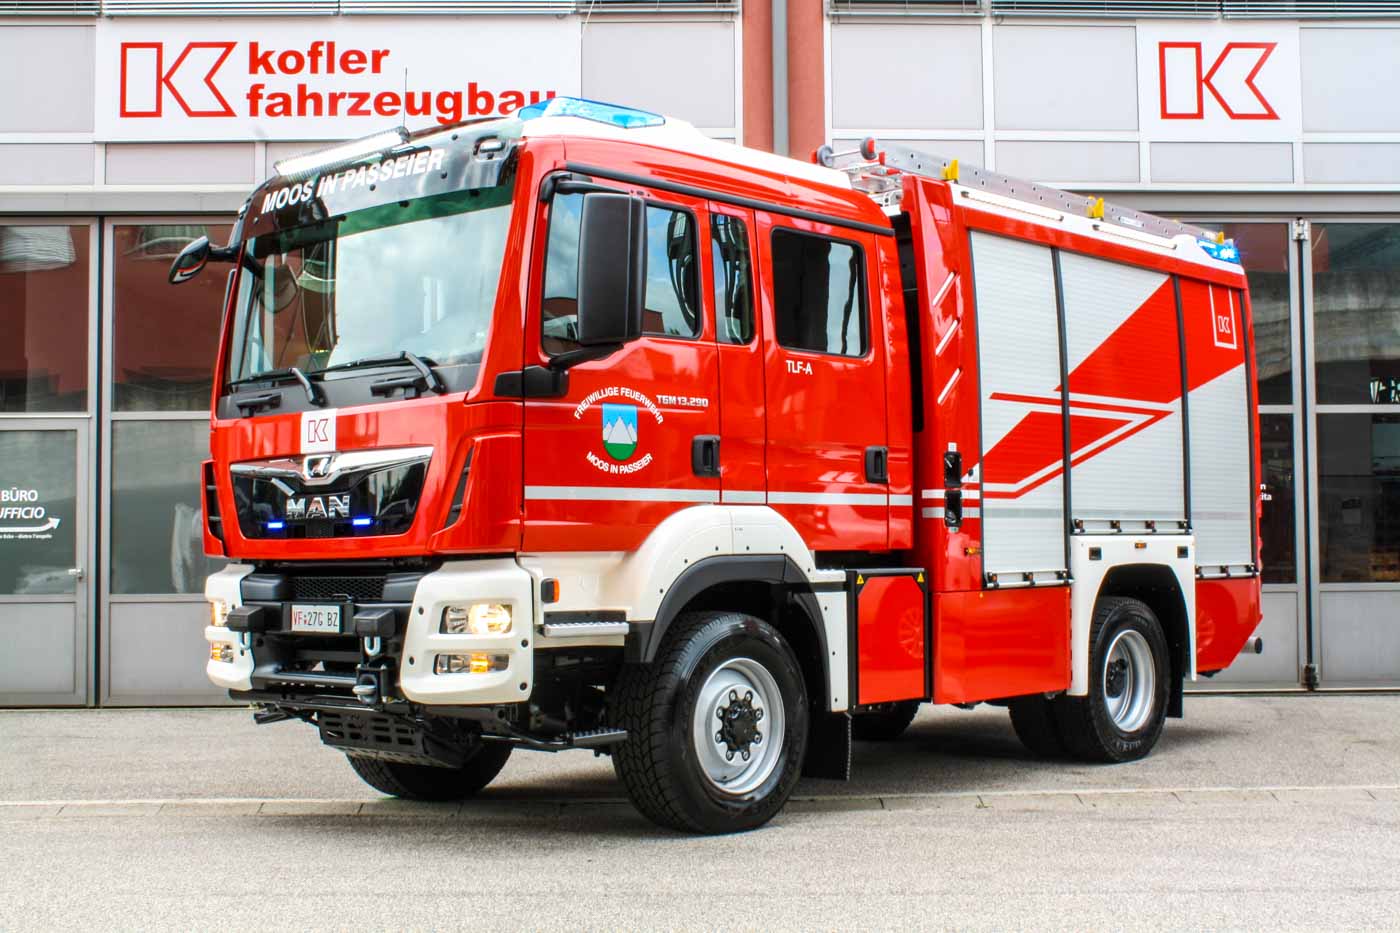 Kofler-Fahrzeugbau-FF-Moos-in-Passeier